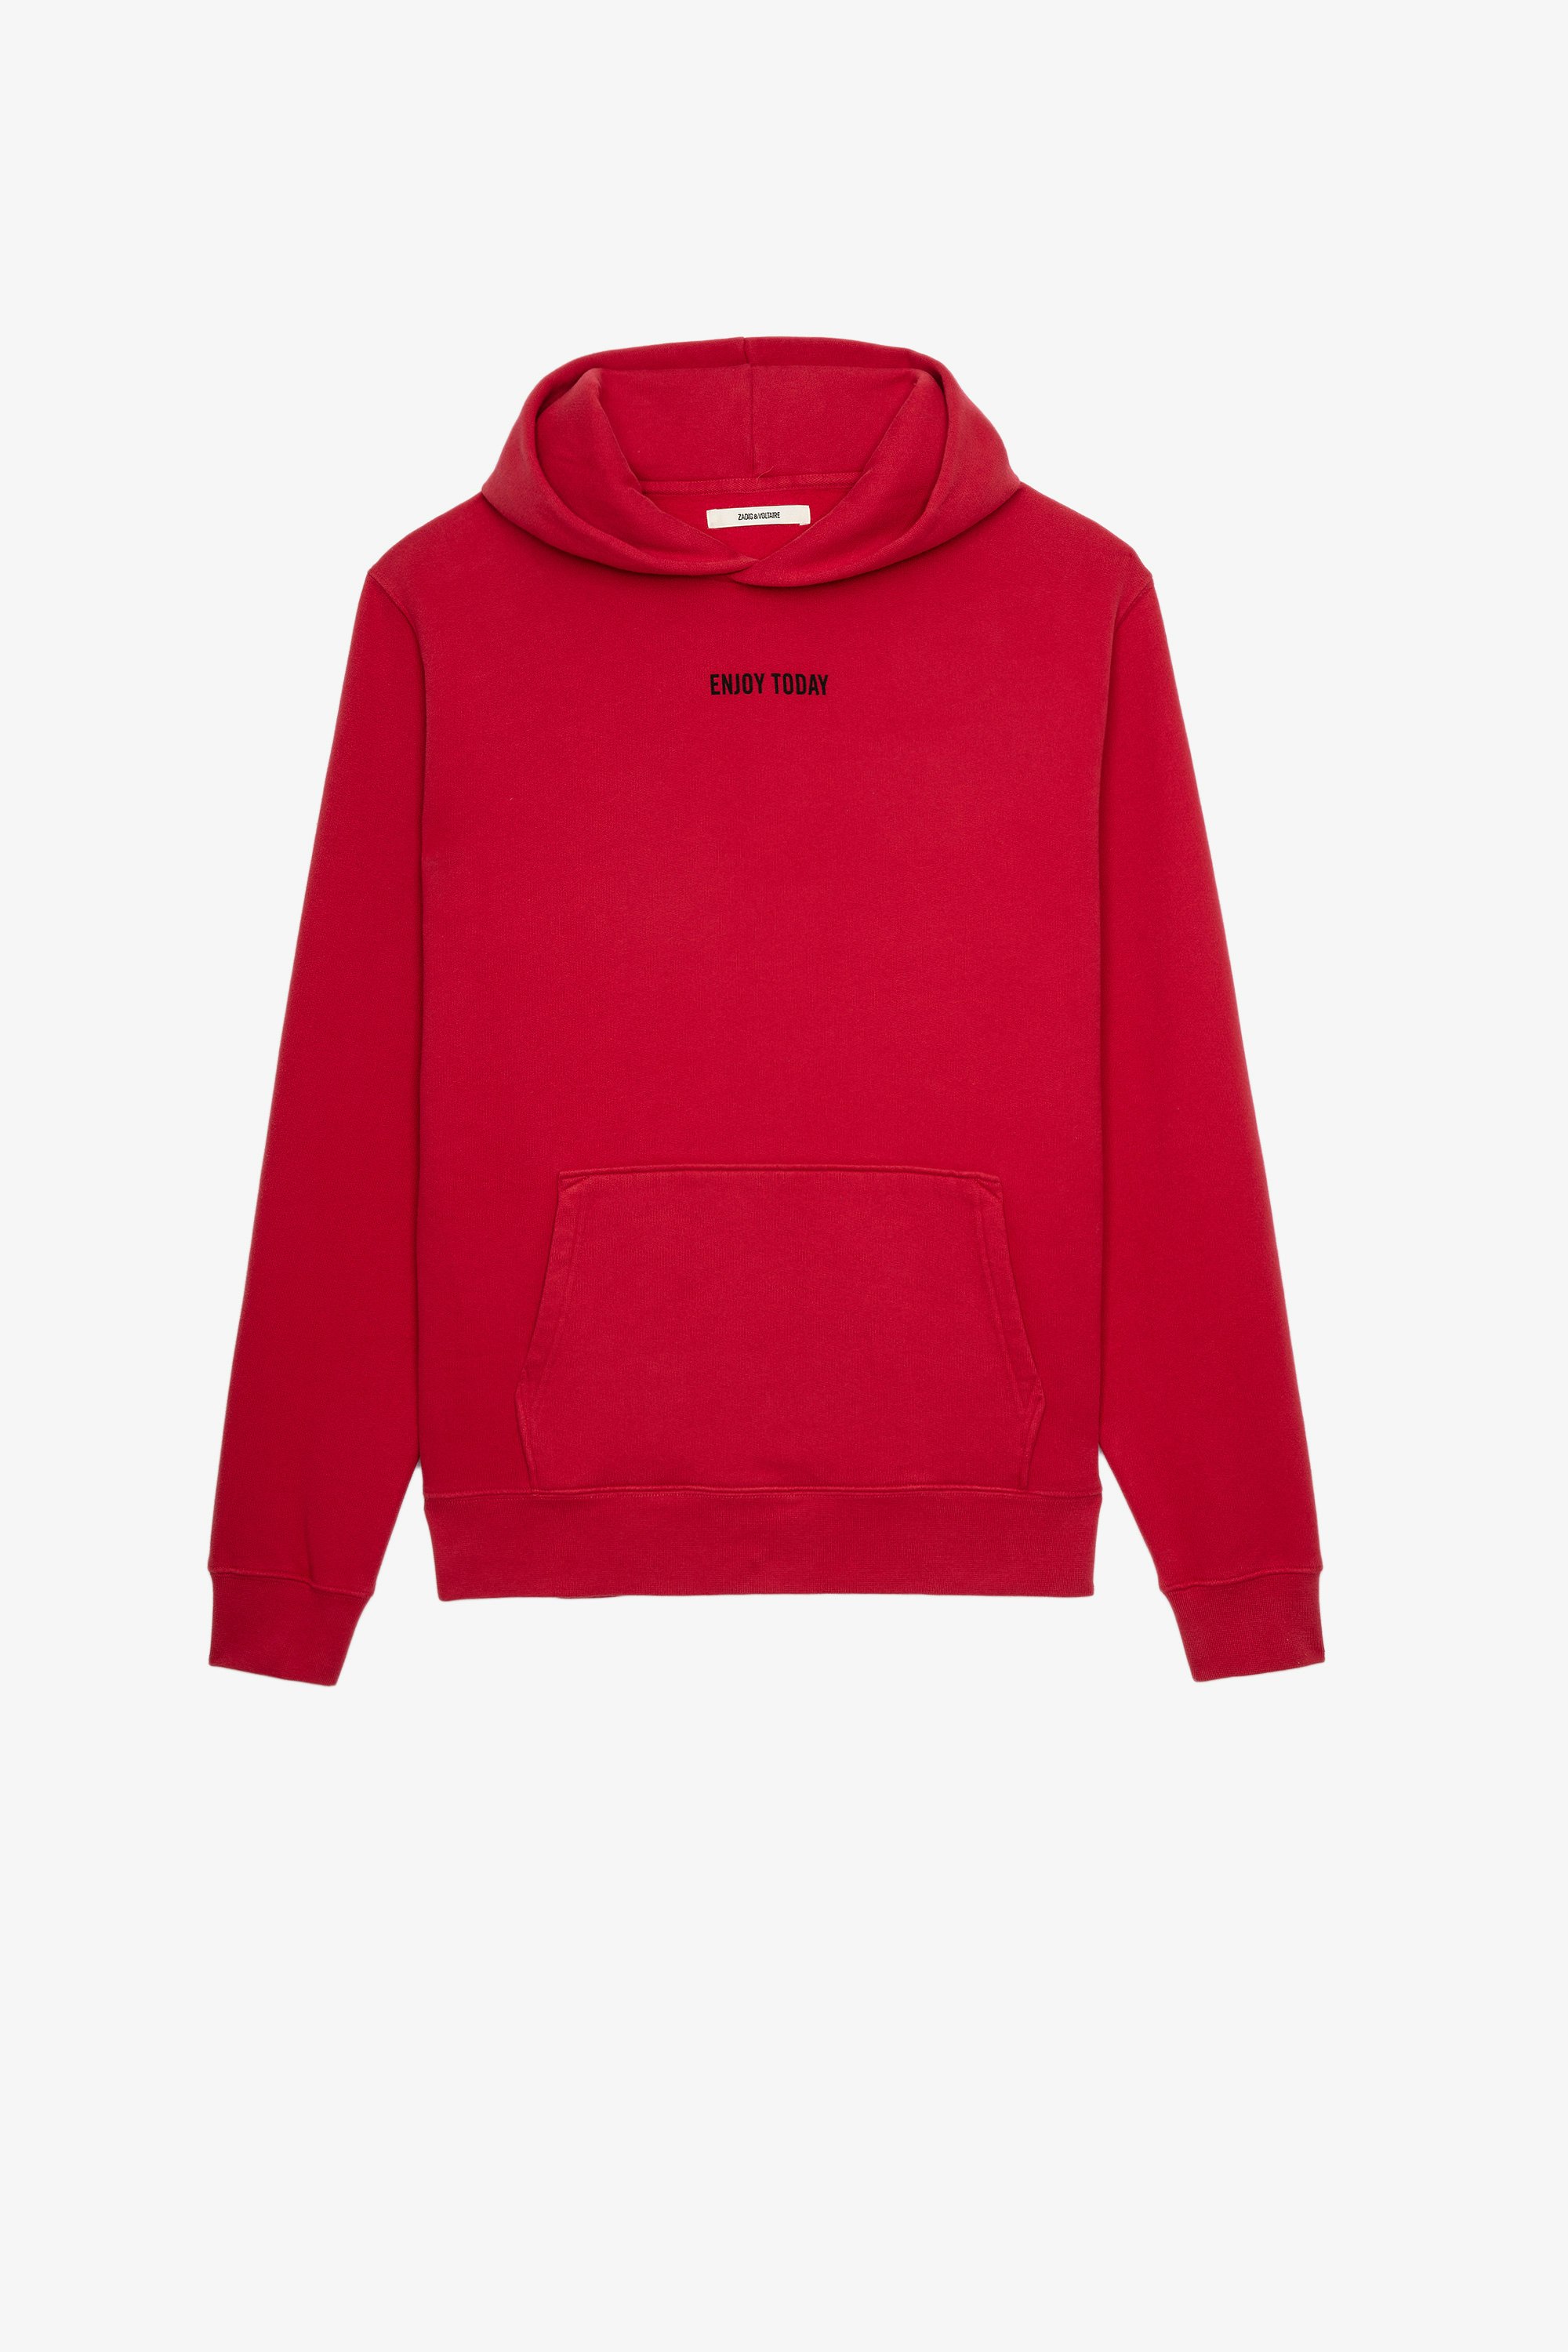 Sanchi Photoprint Sweatshirt Men’s red cotton sweatshirt with photoprint on back